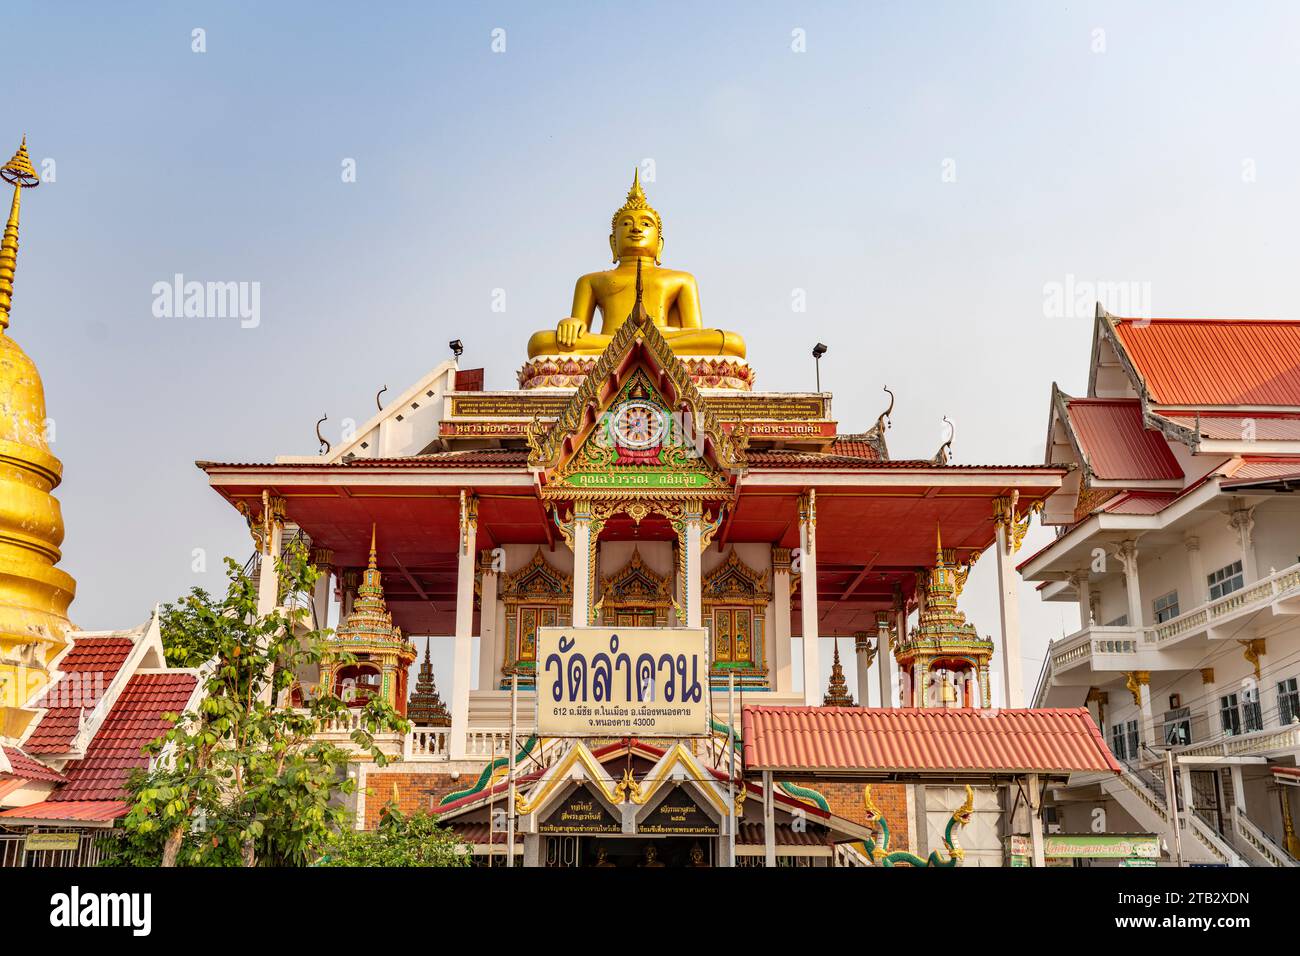 Der buddhistische Tempel Wat Lam Duan in Nong Khai, Thailand, Asien   |  Wat Lam Duan buddhist temple in Nong Khai, Thailand, Asia Stock Photo